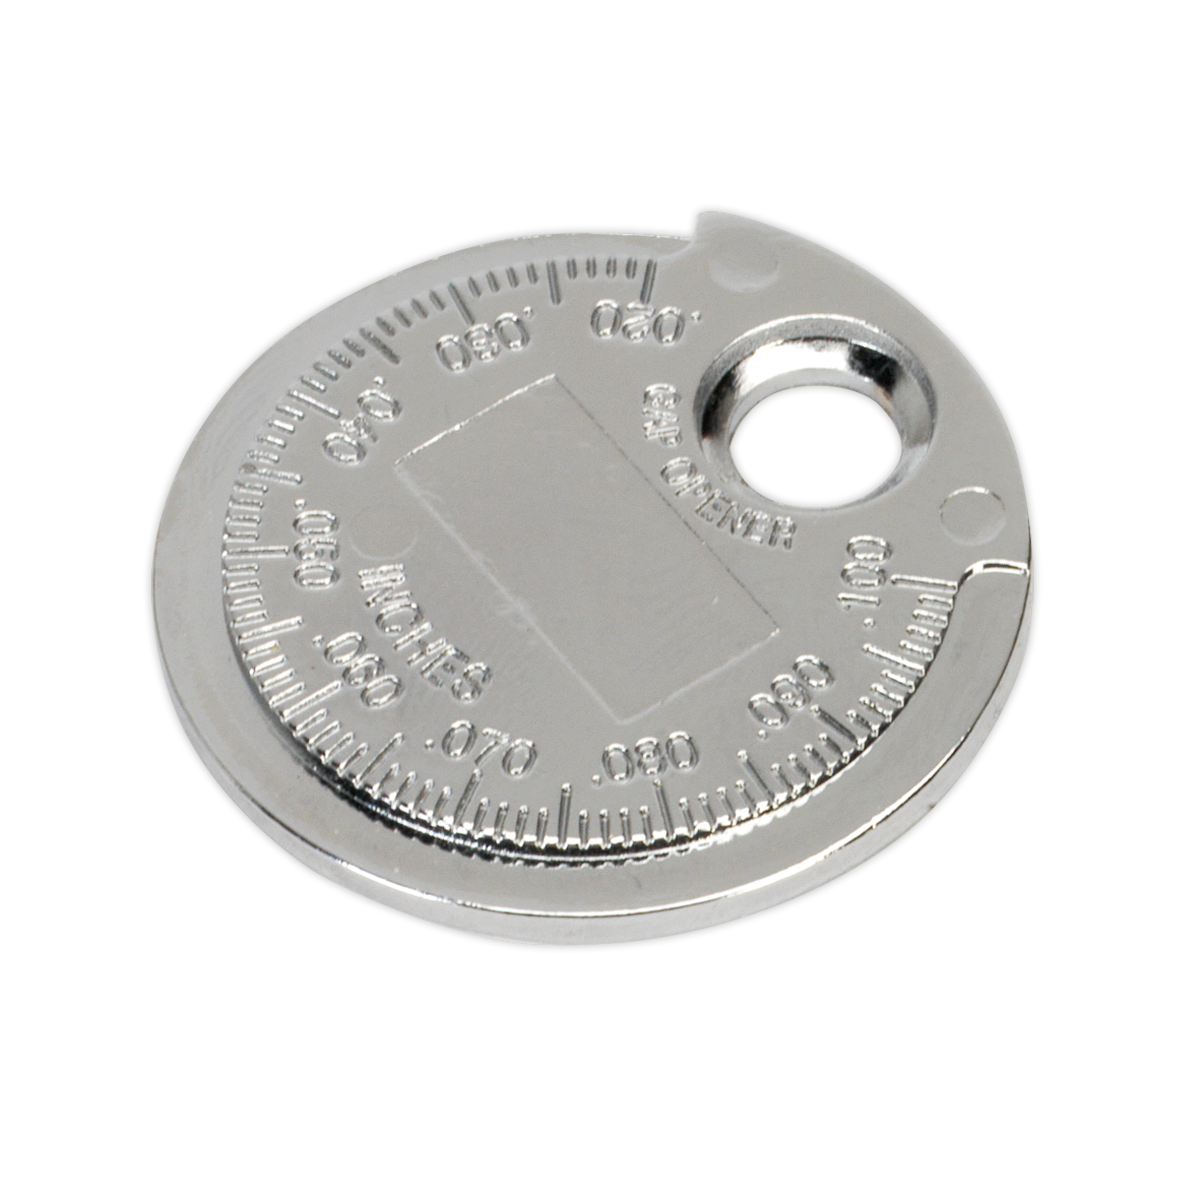 Spark Plug Gapper Circular Ramp Type 0.6-2.4mm (0.020" to 0.100") - VS119 - Farming Parts